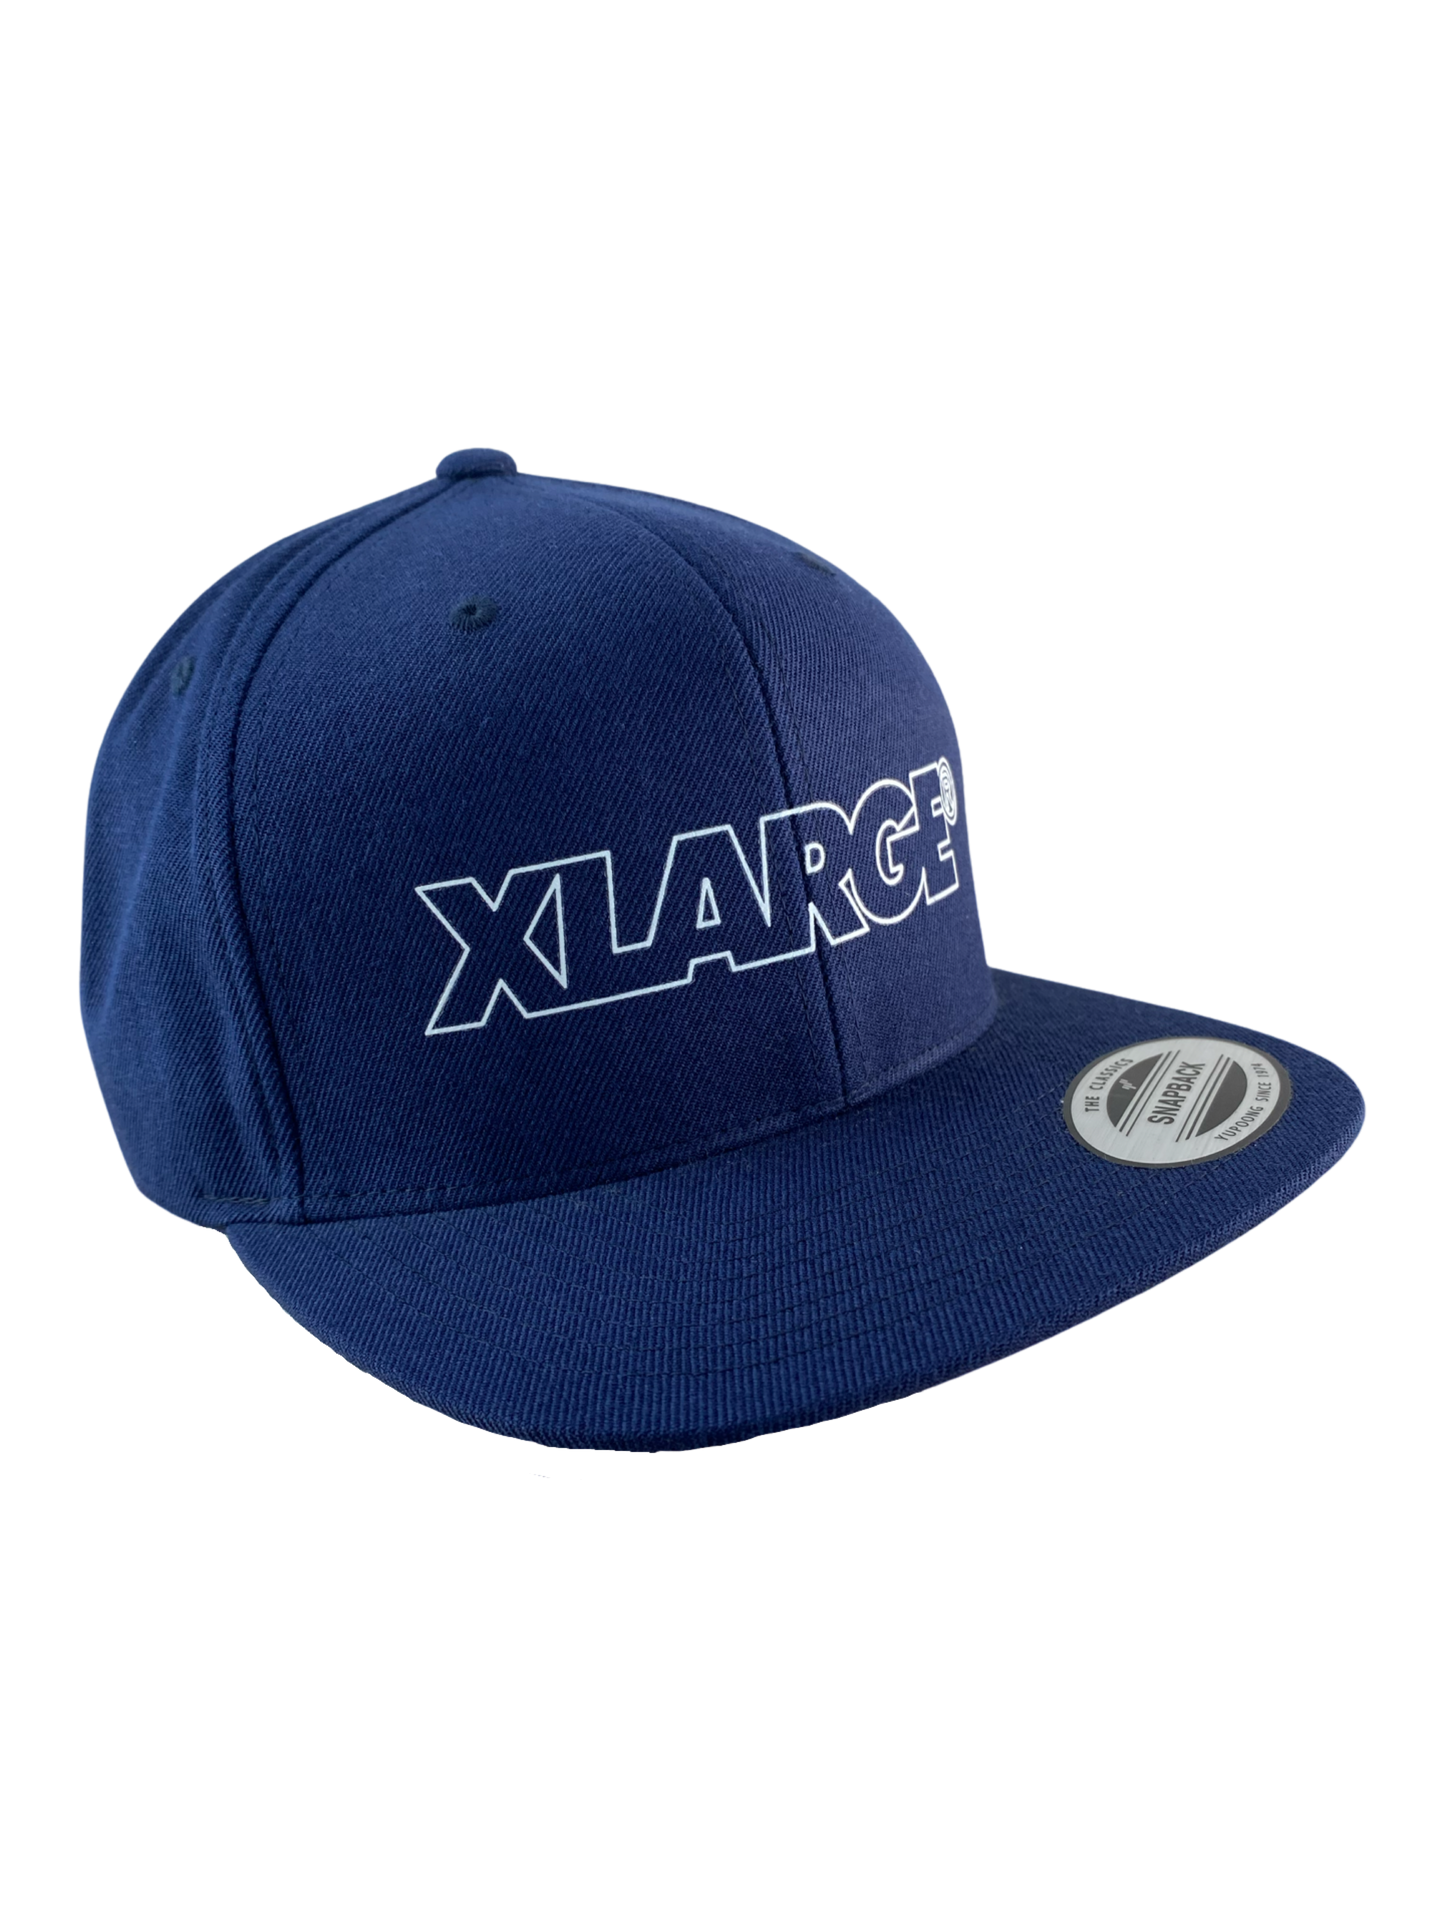 X-Large Cap "Kellen Hat" - Navy